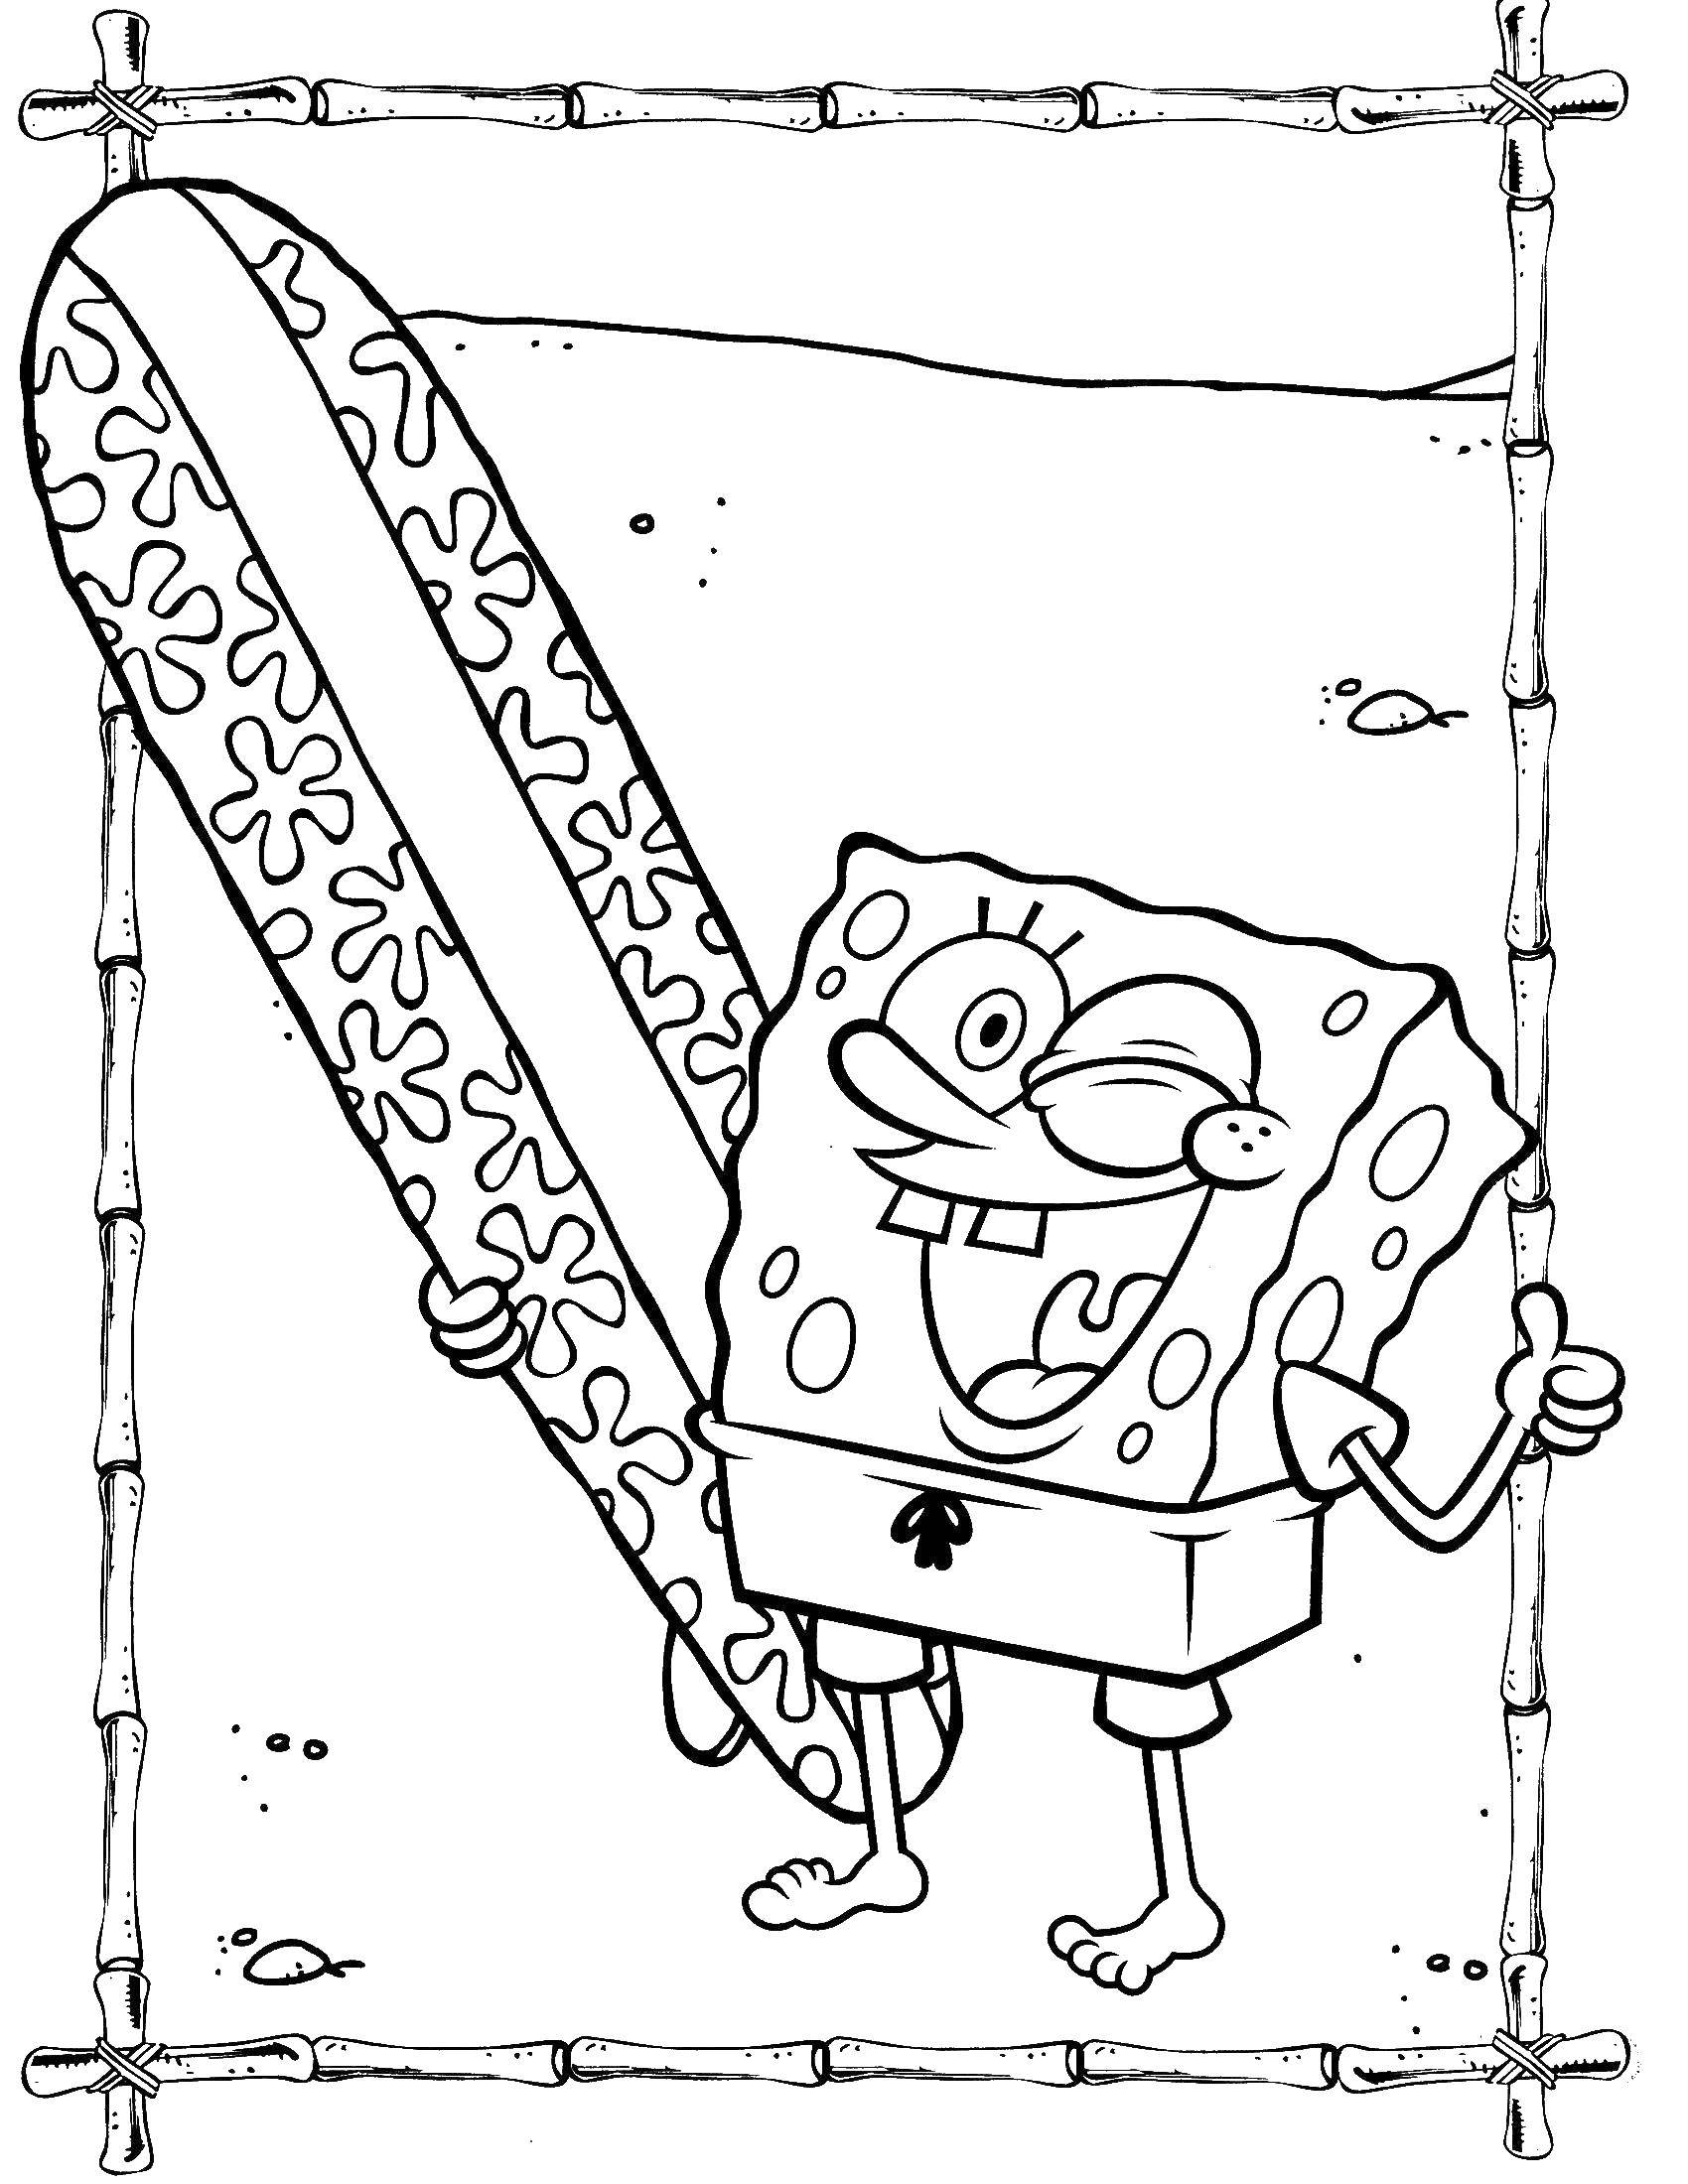 Coloring Spongebob with surfboard. Category Spongebob. Tags:  spongebob, Patrick.